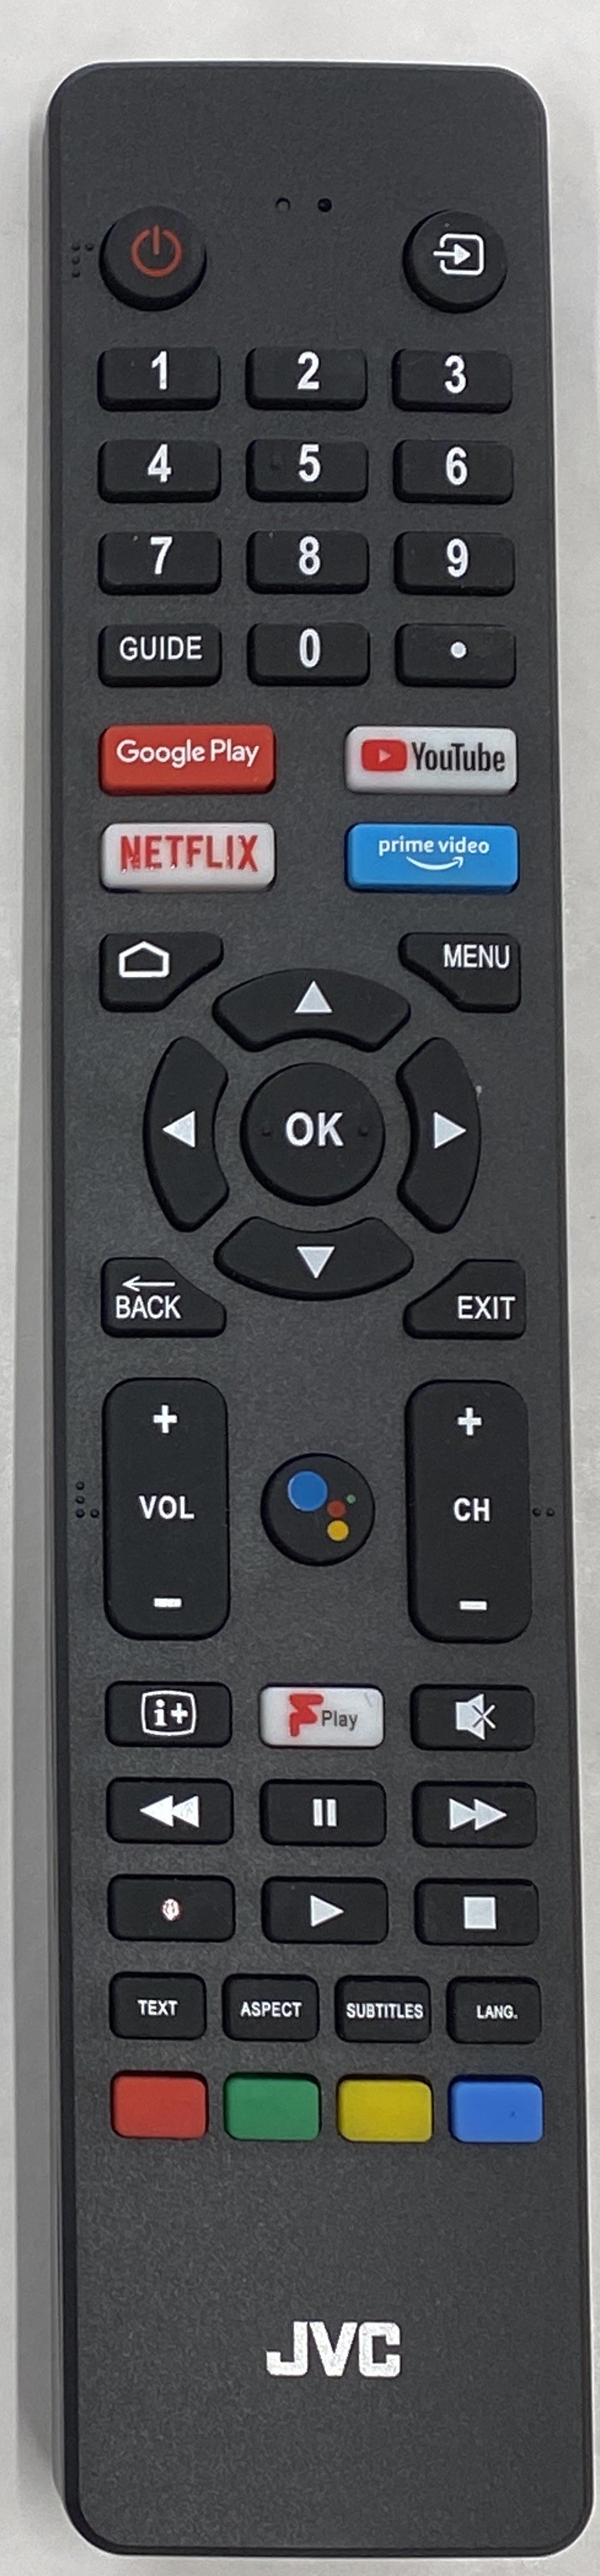 JVC LT-32CA690 Remote Control Original 